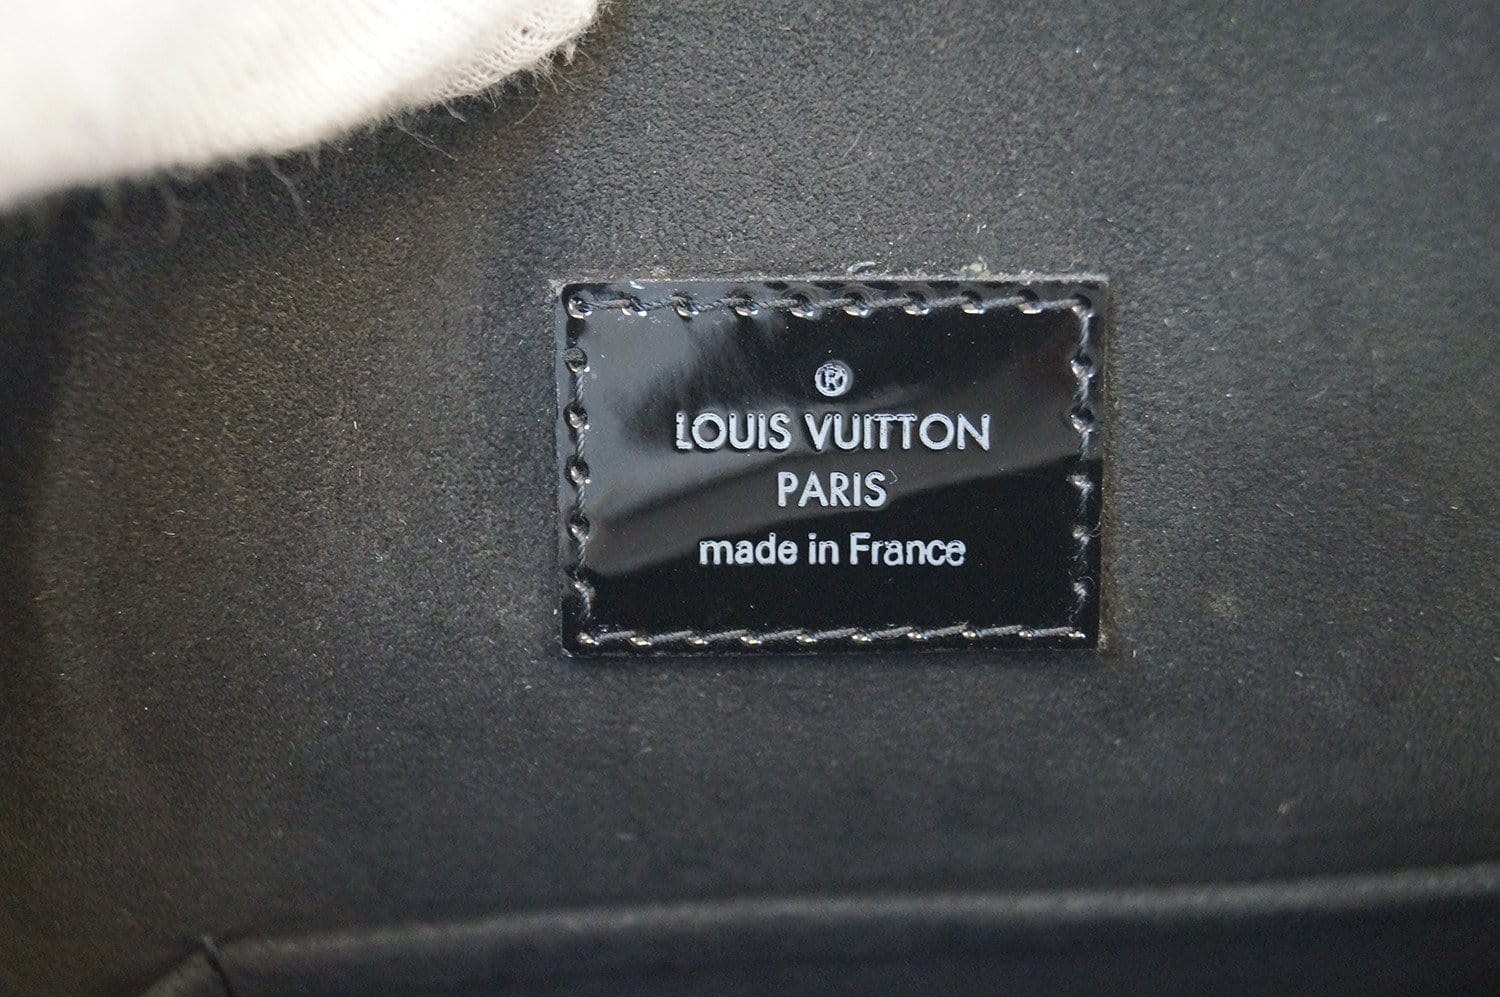 Louis Vuitton Mint Green Electric Epi Leather Alma GM Bag Louis Vuitton